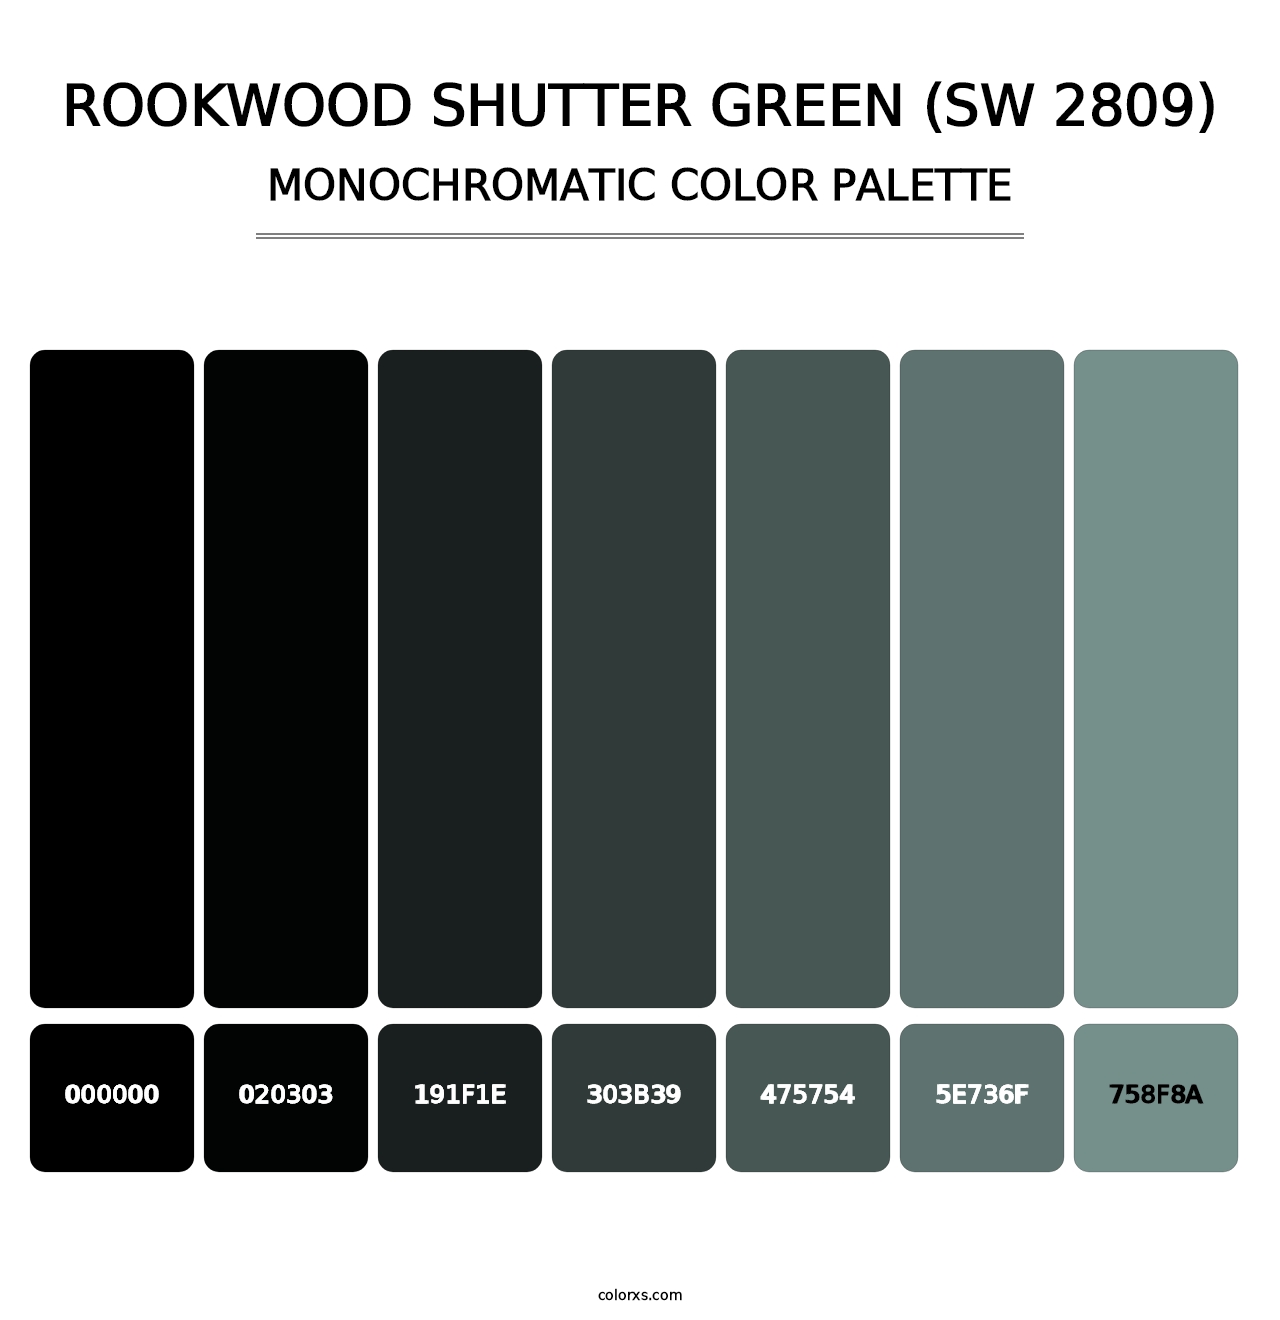 Rookwood Shutter Green (SW 2809) - Monochromatic Color Palette